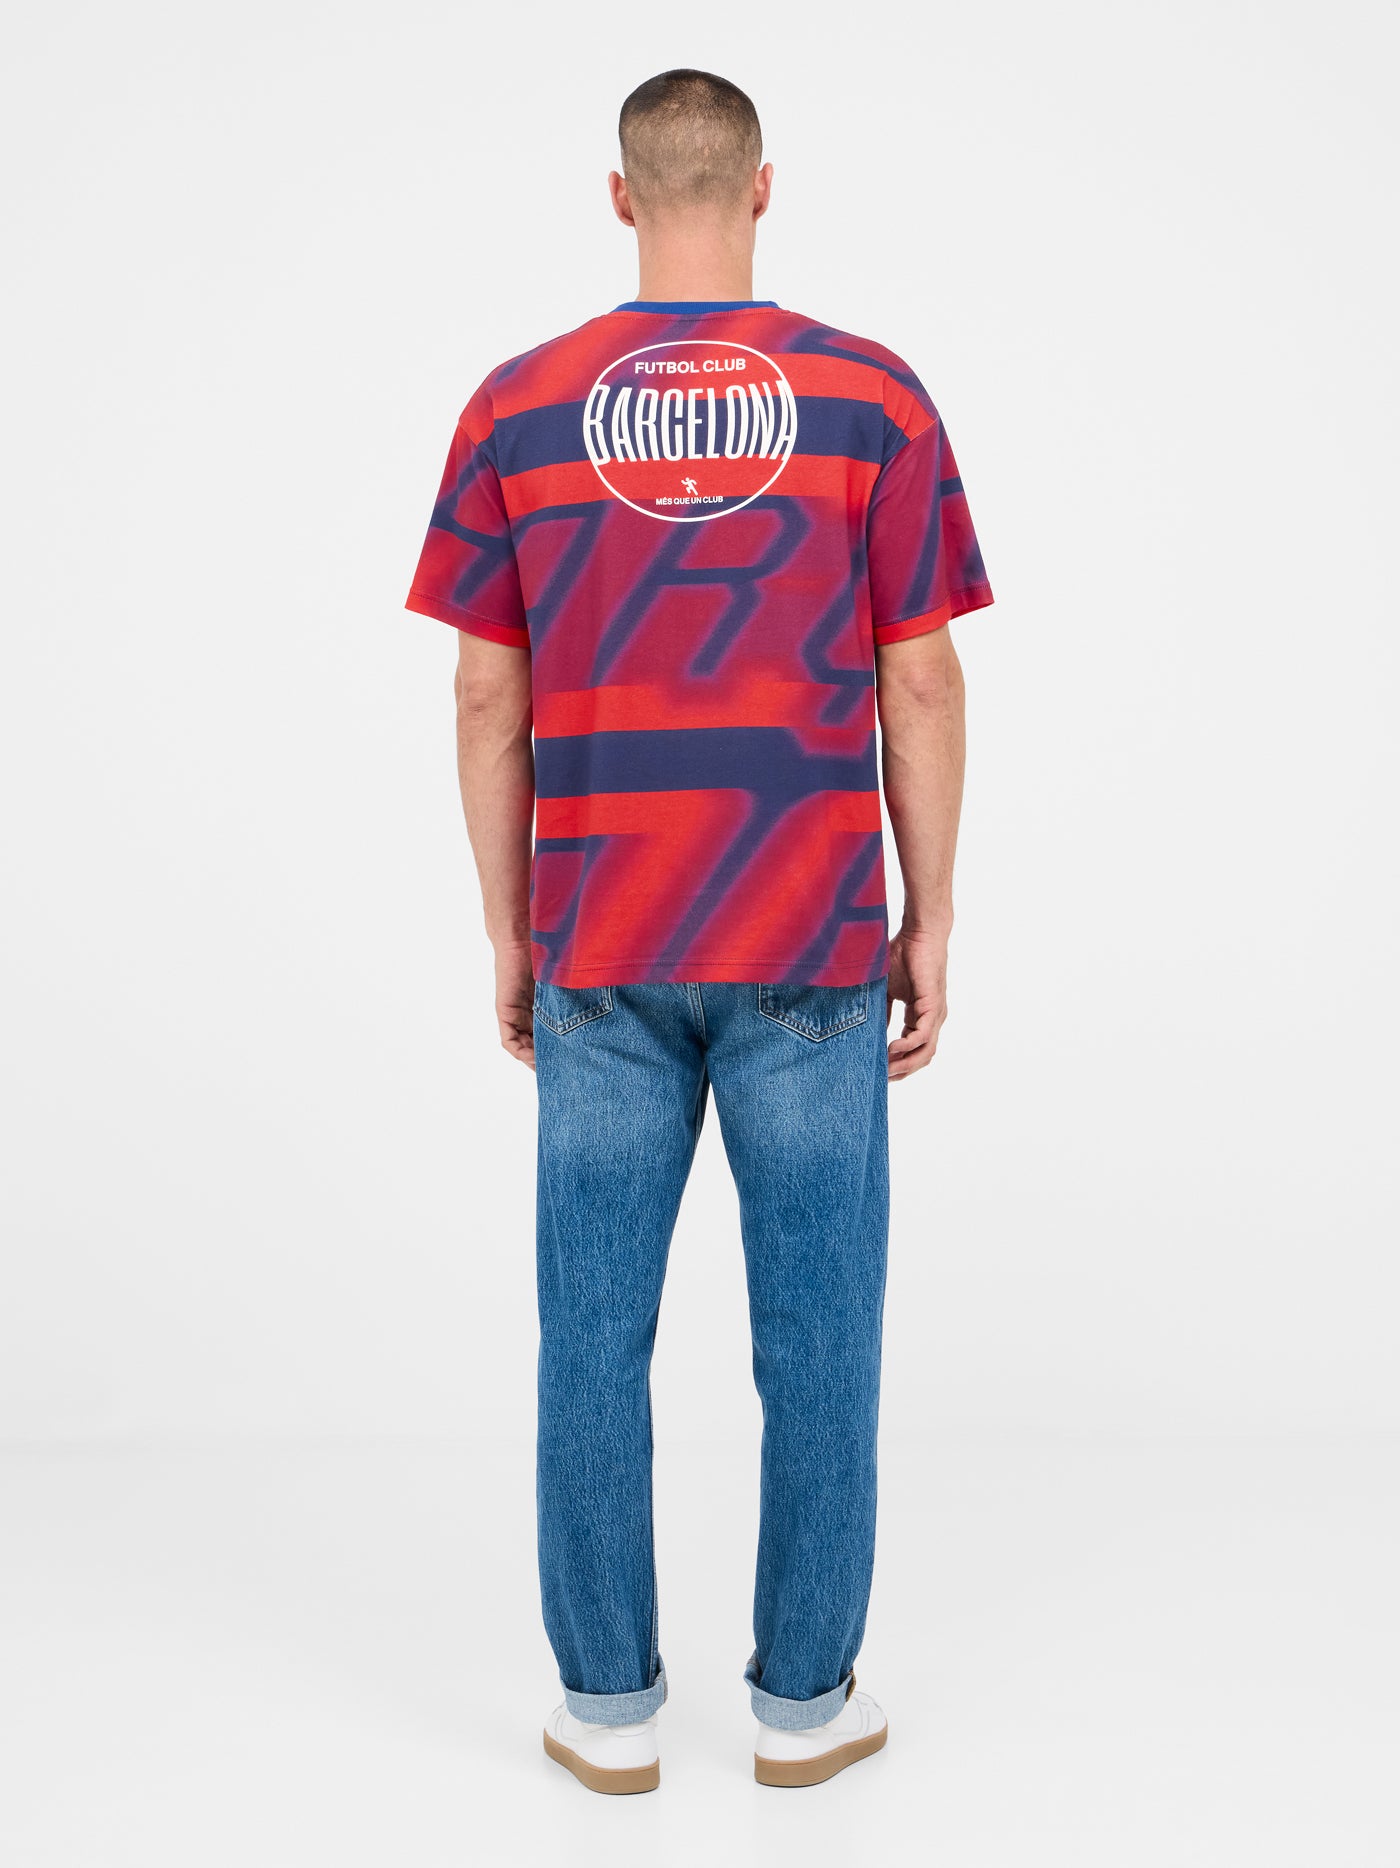 Short sleeve t-shirt with Barça print